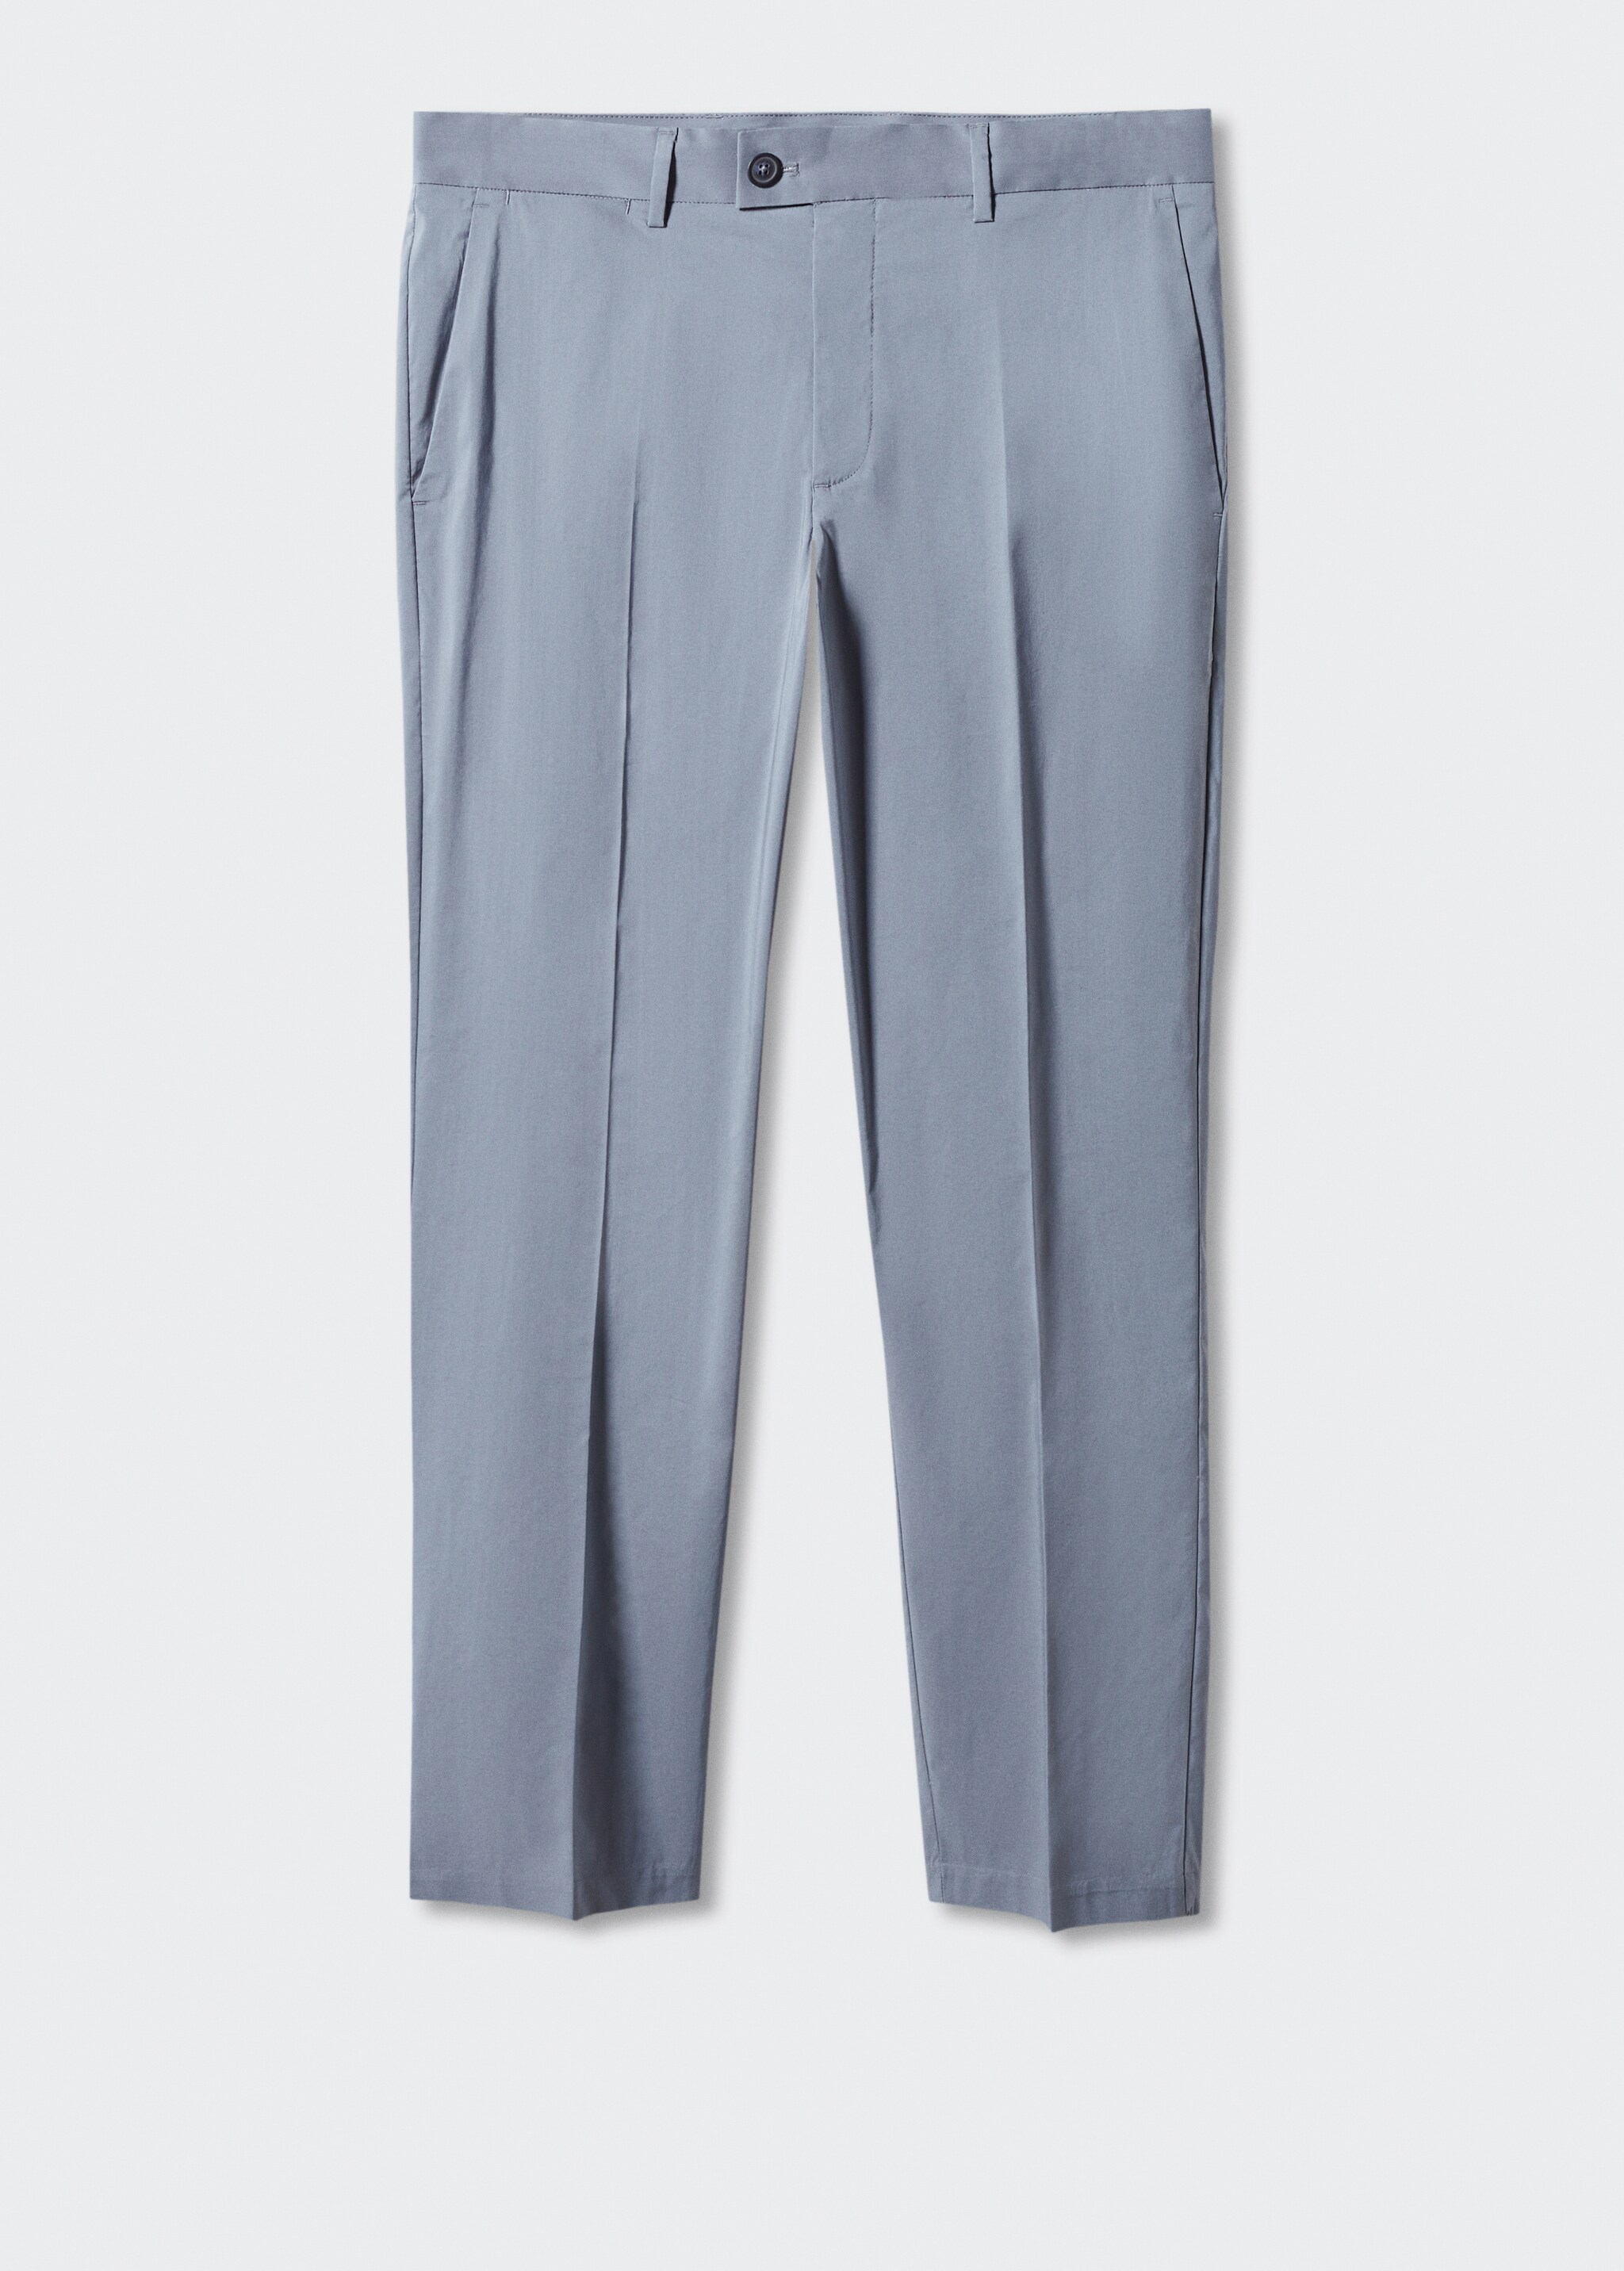 Pamuklu hafif pantolon - Modelsiz ürün